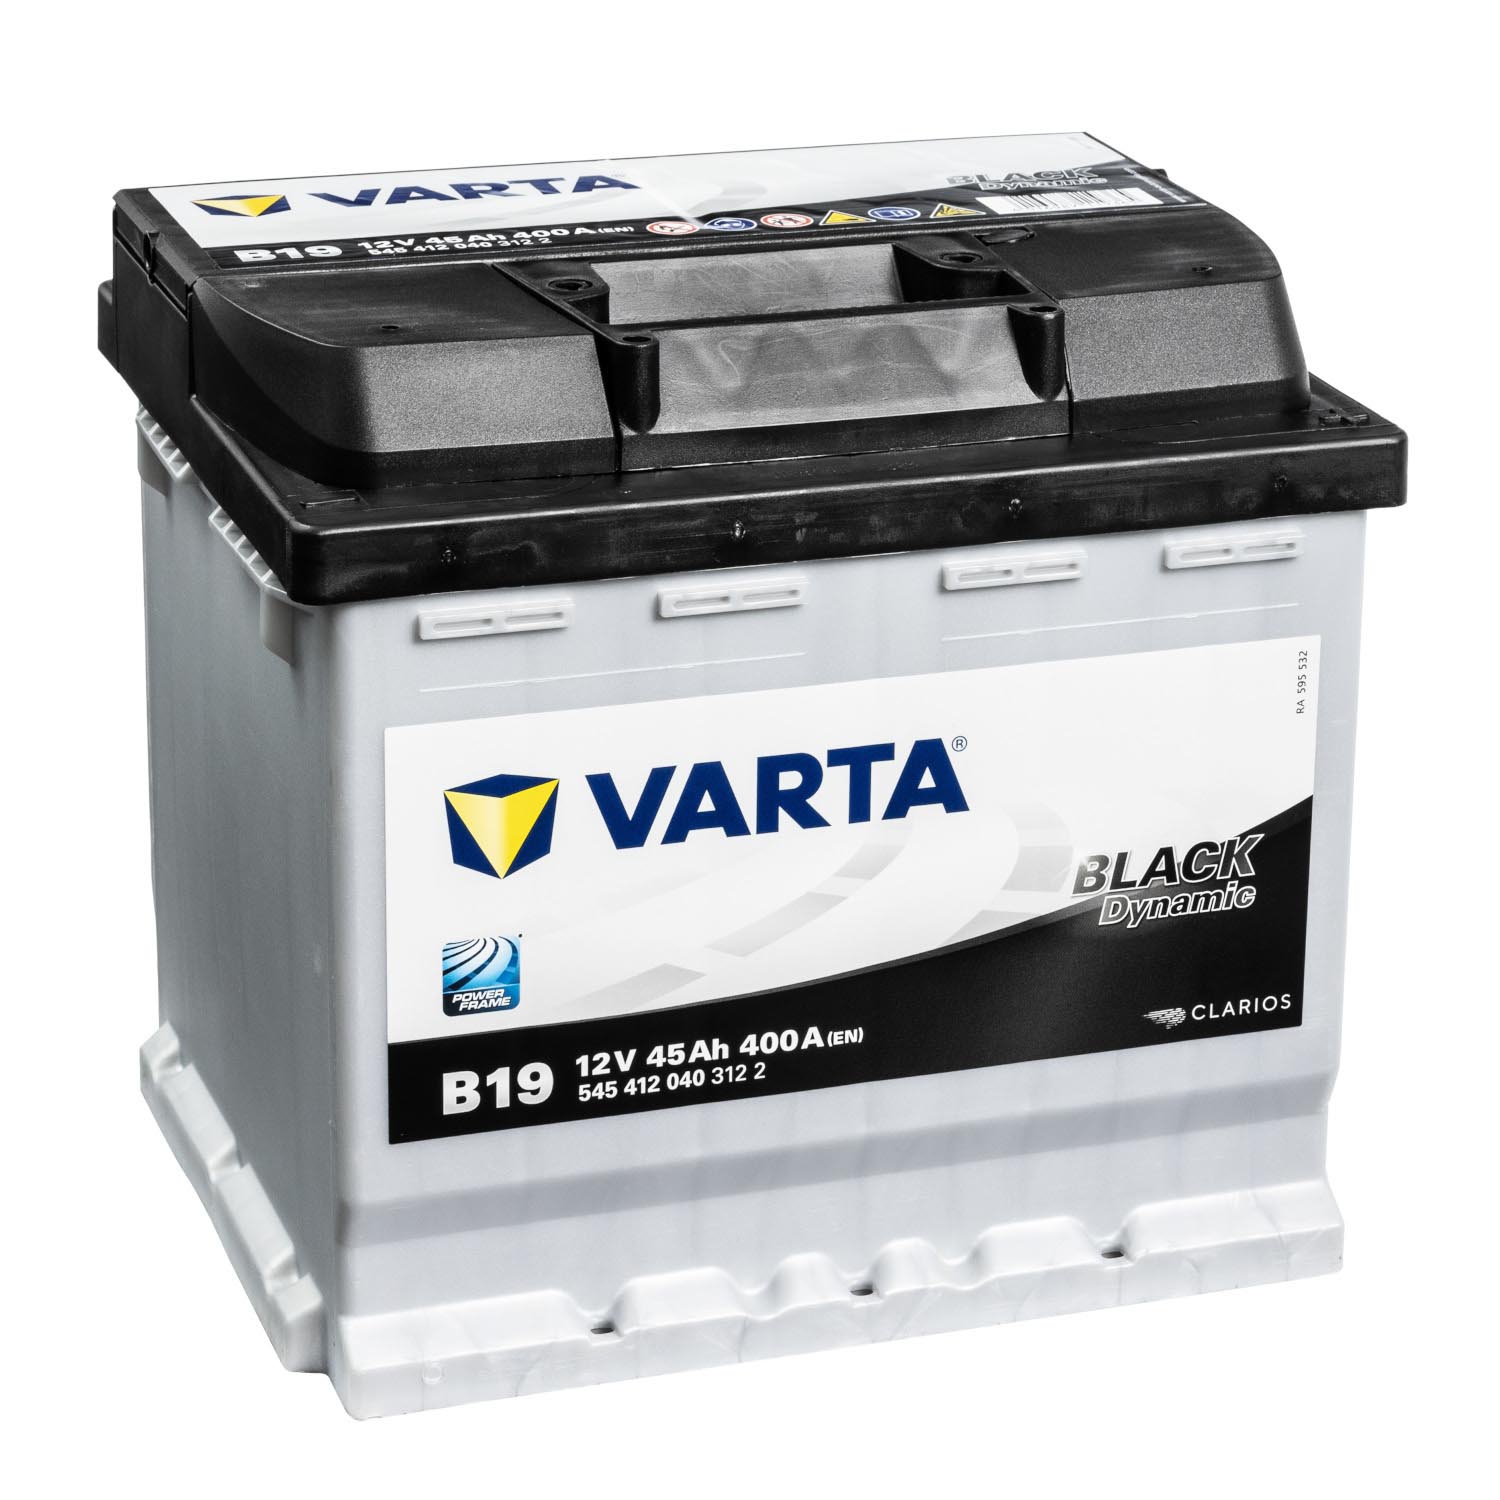 VARTA 45 Ah Starterbatterie B19 BLACK DYNAMIC 12V 45Ah Batterie 545412040 NEU 